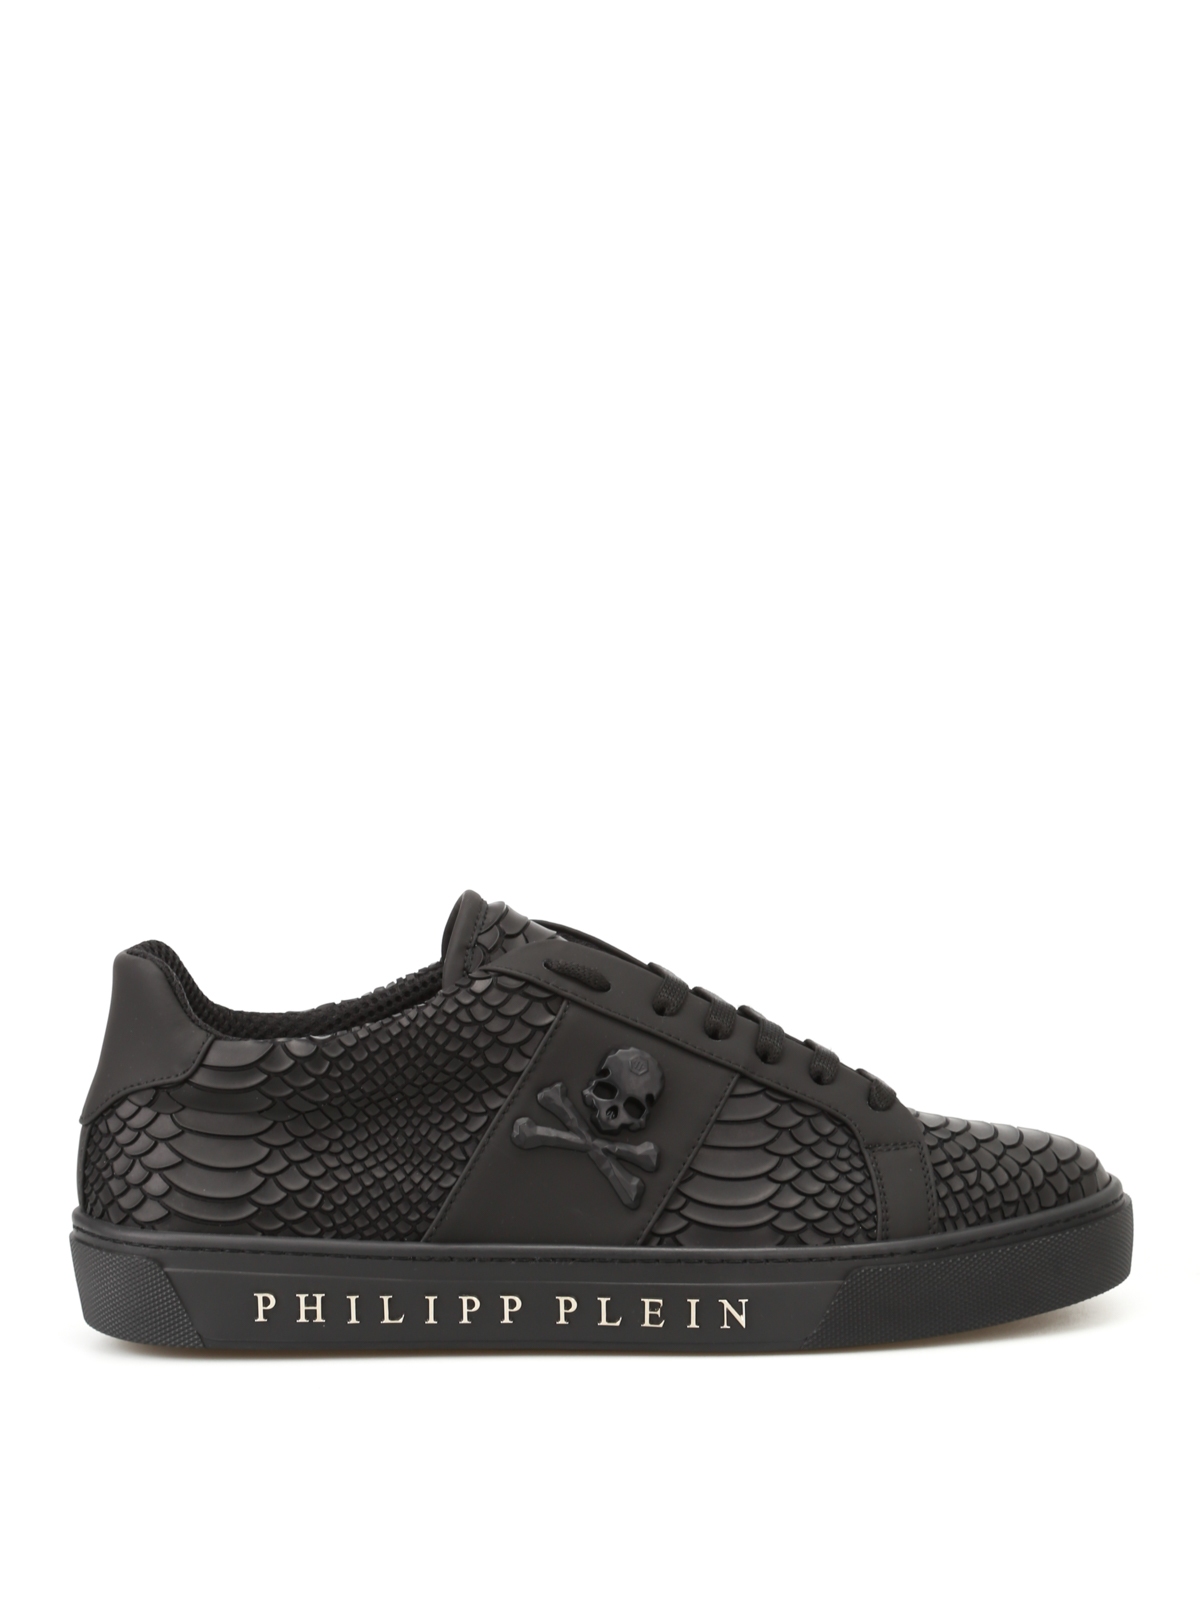 philipp plein leather shoes